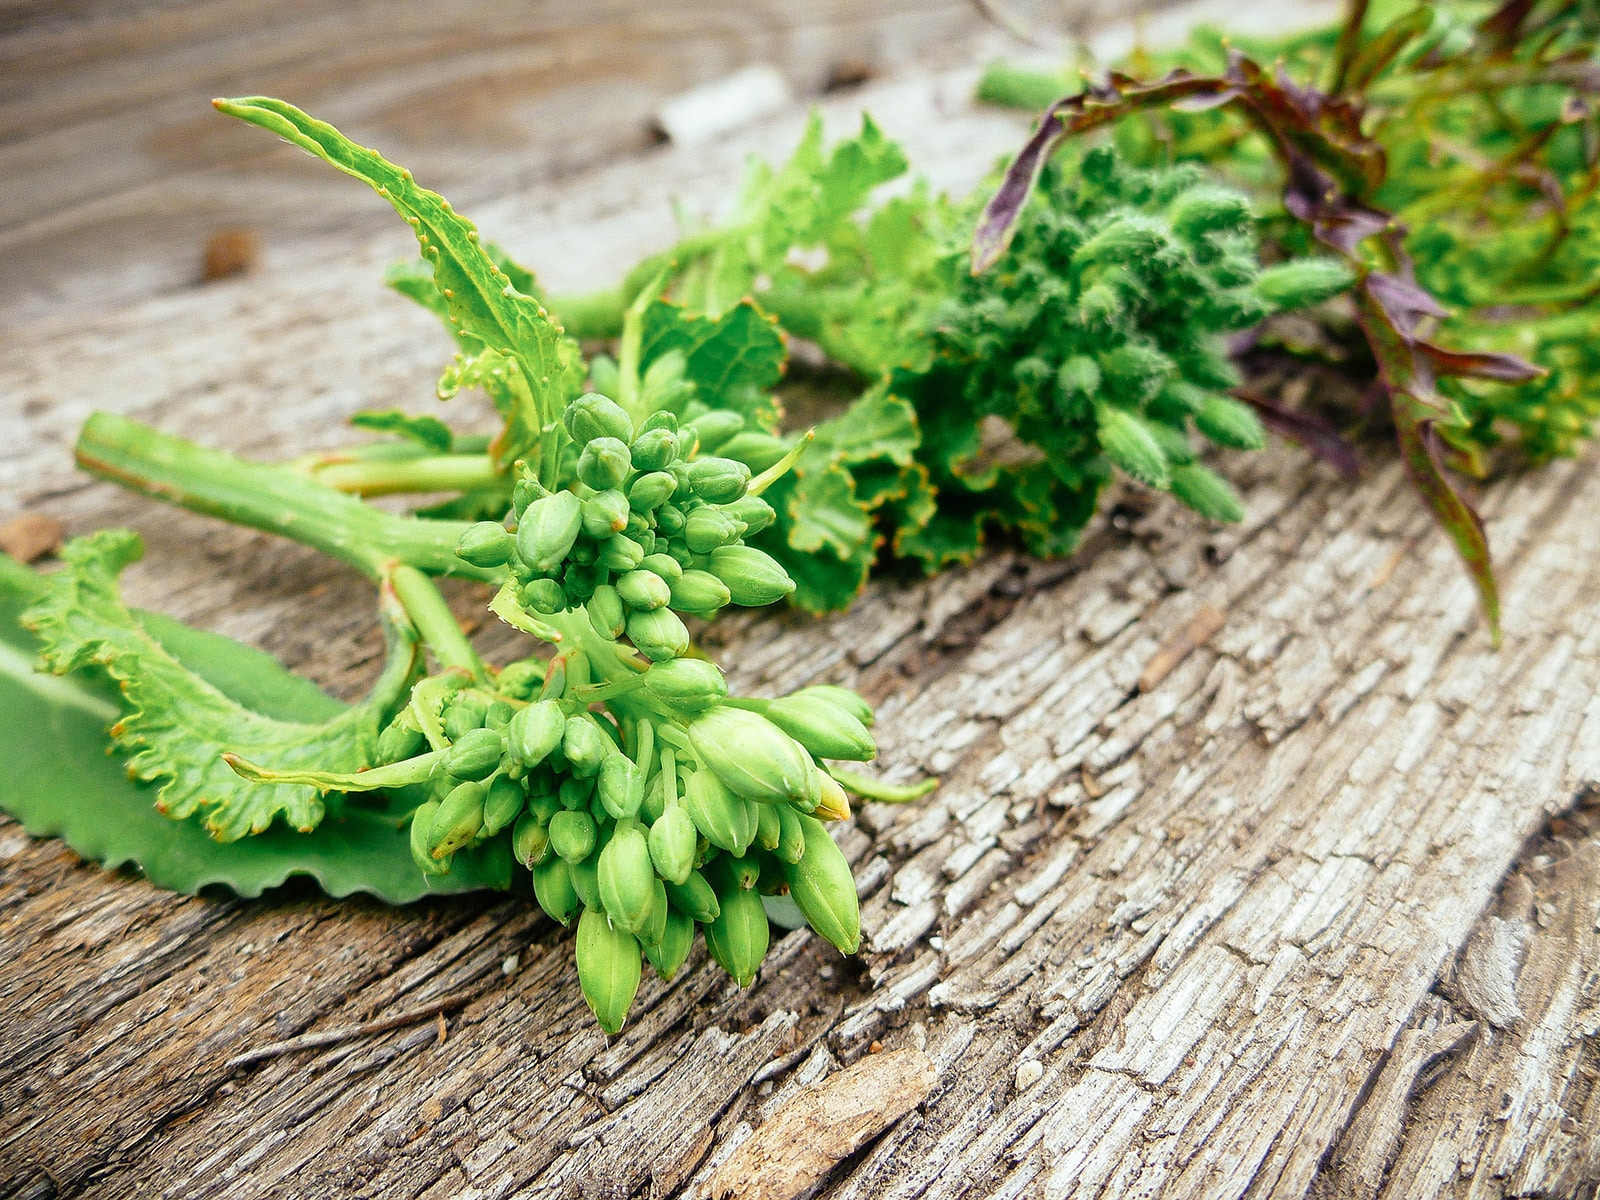 Can flowering kale be eaten?